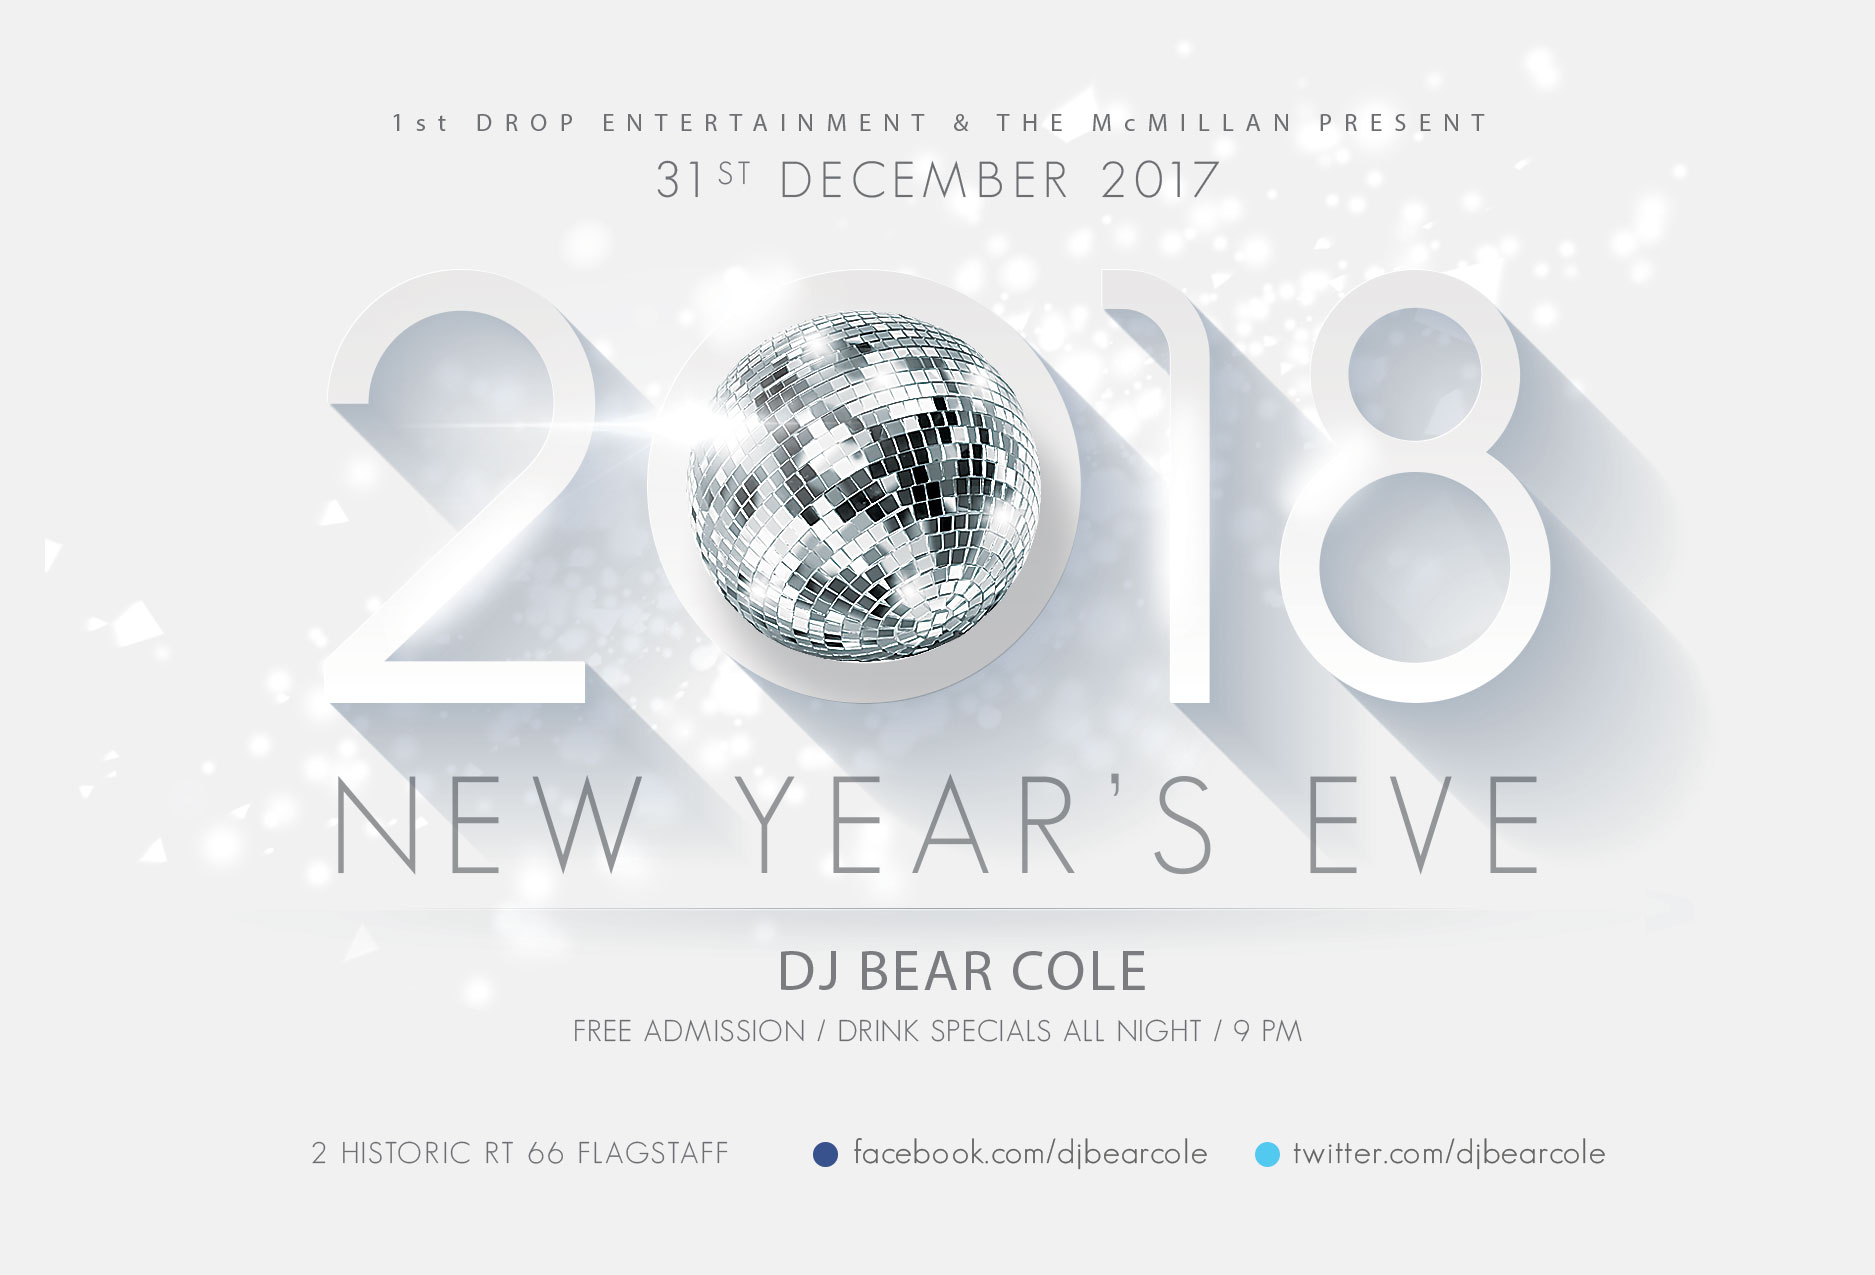 New Year's Eve 2018 Celebration with DJ Bear Cole